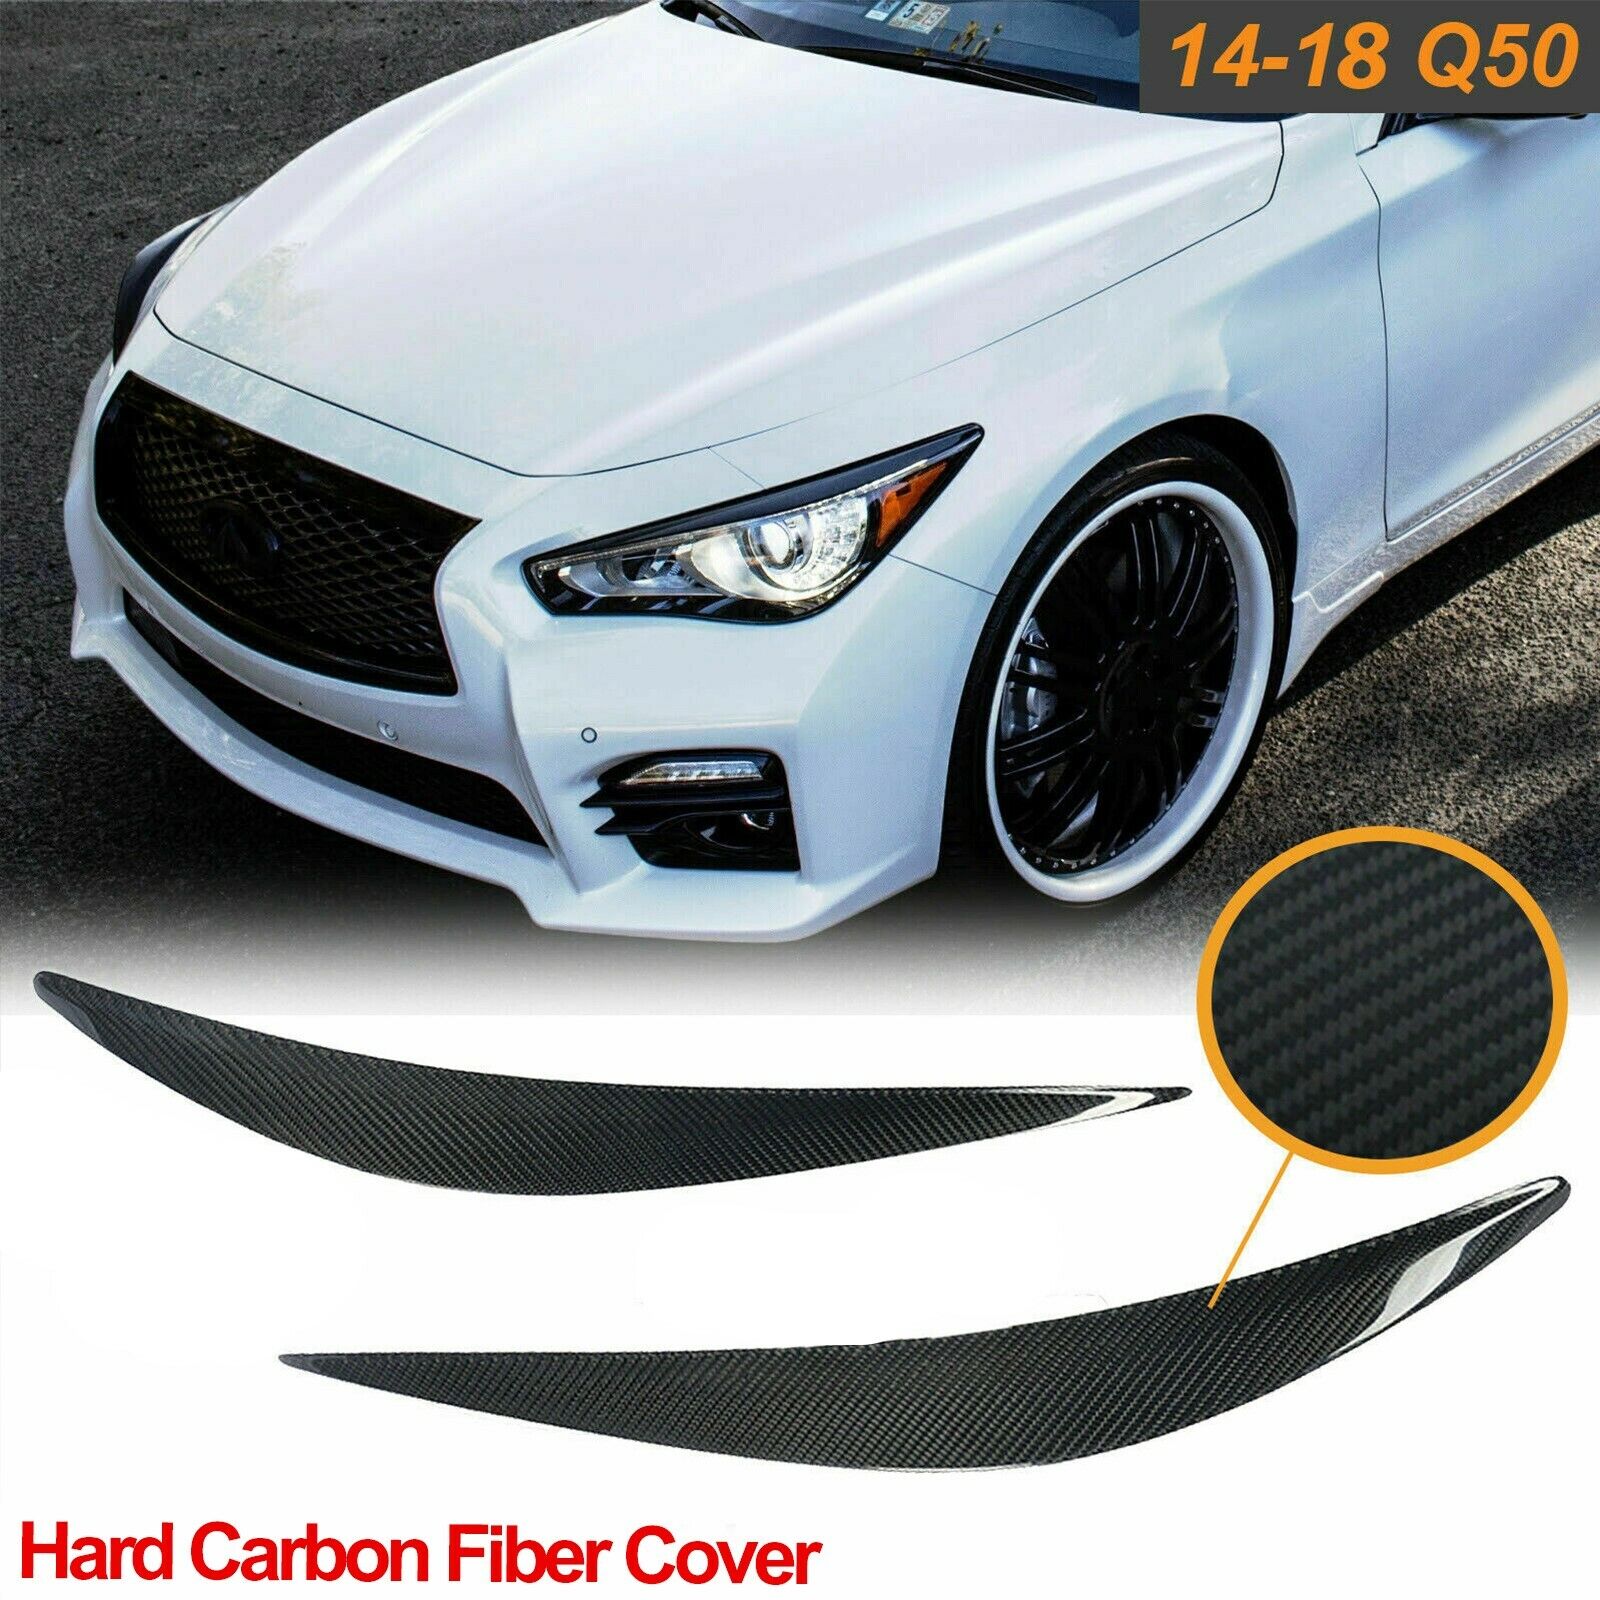 Black Carbon Fiber Eyelid Covers Headlight Eyebrow Lids Fit Infiniti Q50 2014-up